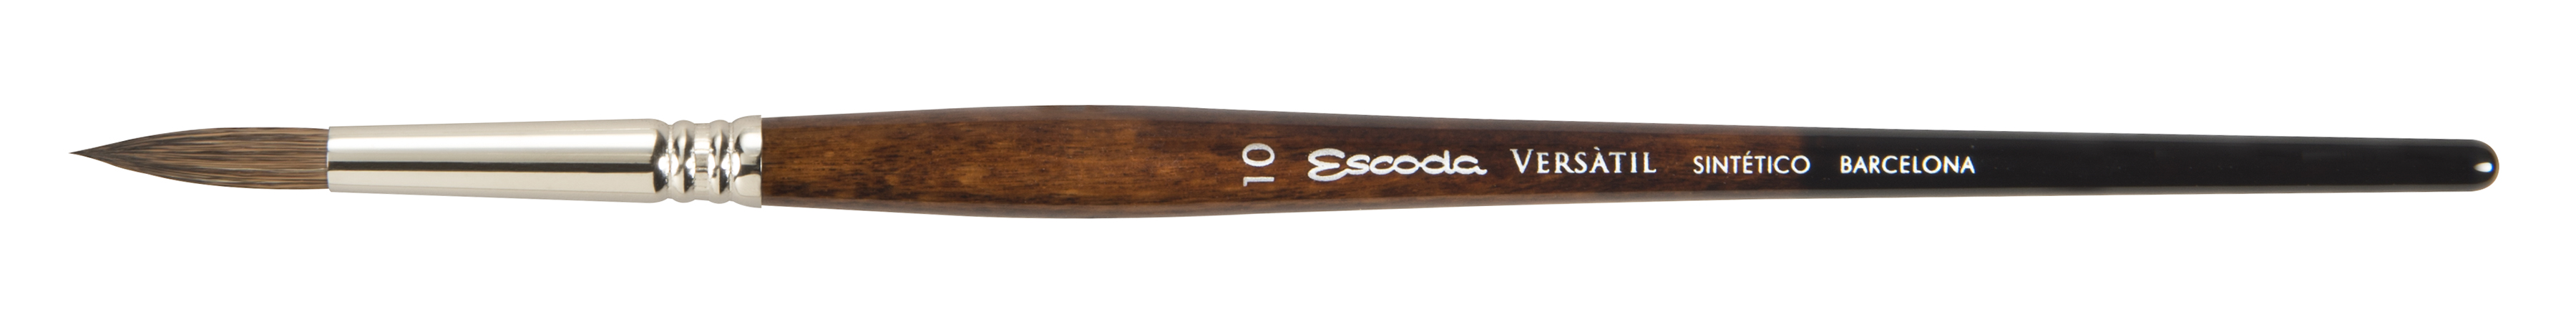 Escoda Versatil Brush - Filbert, Size 2, Short Handle 